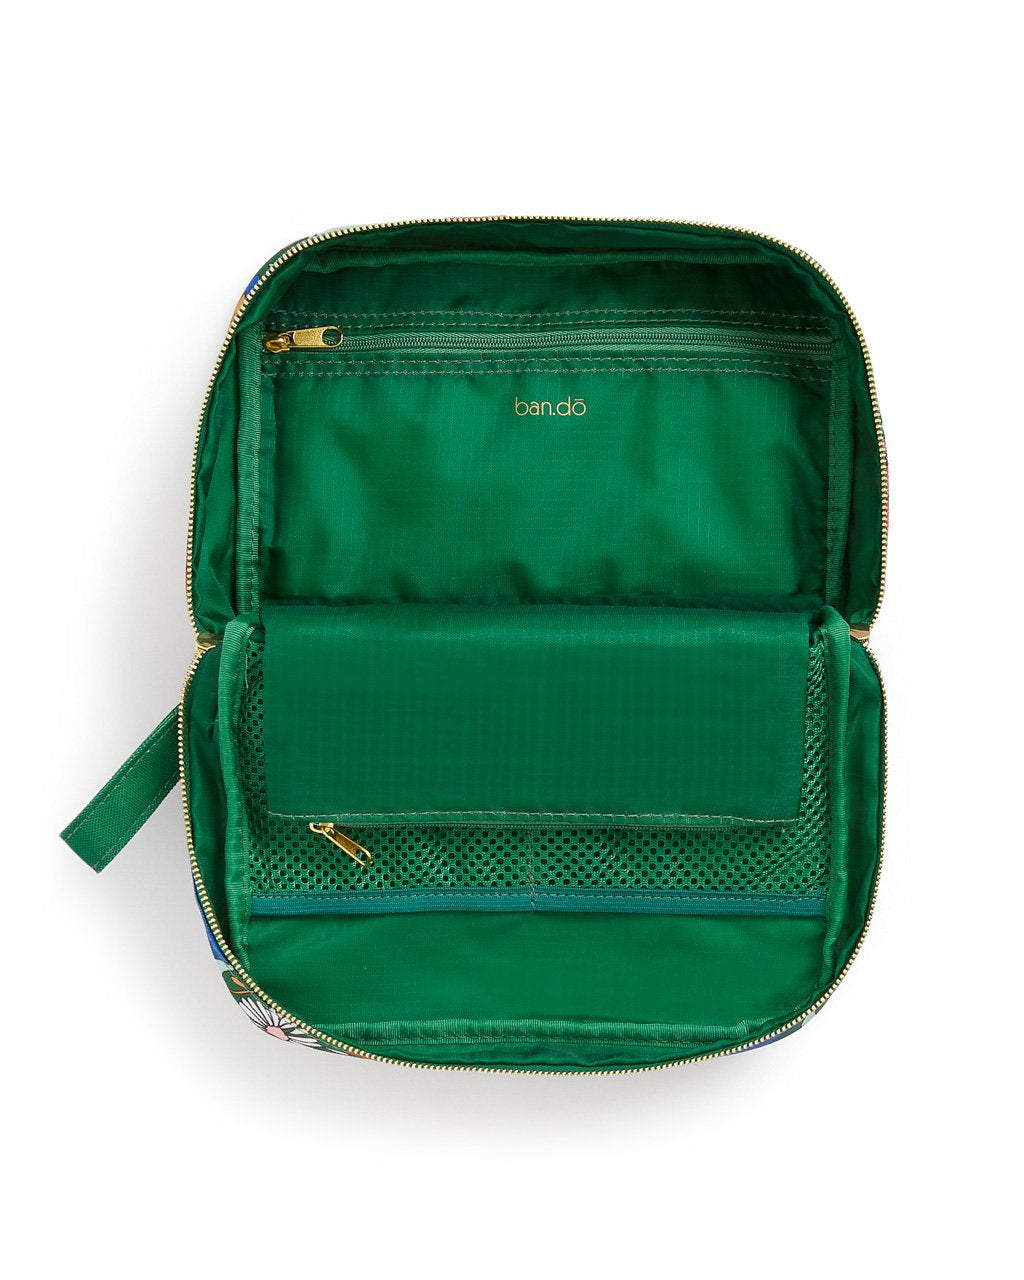 Getaway Toiletry Bag - Emerald Super Bloom by ban.do - toiletries bag ...